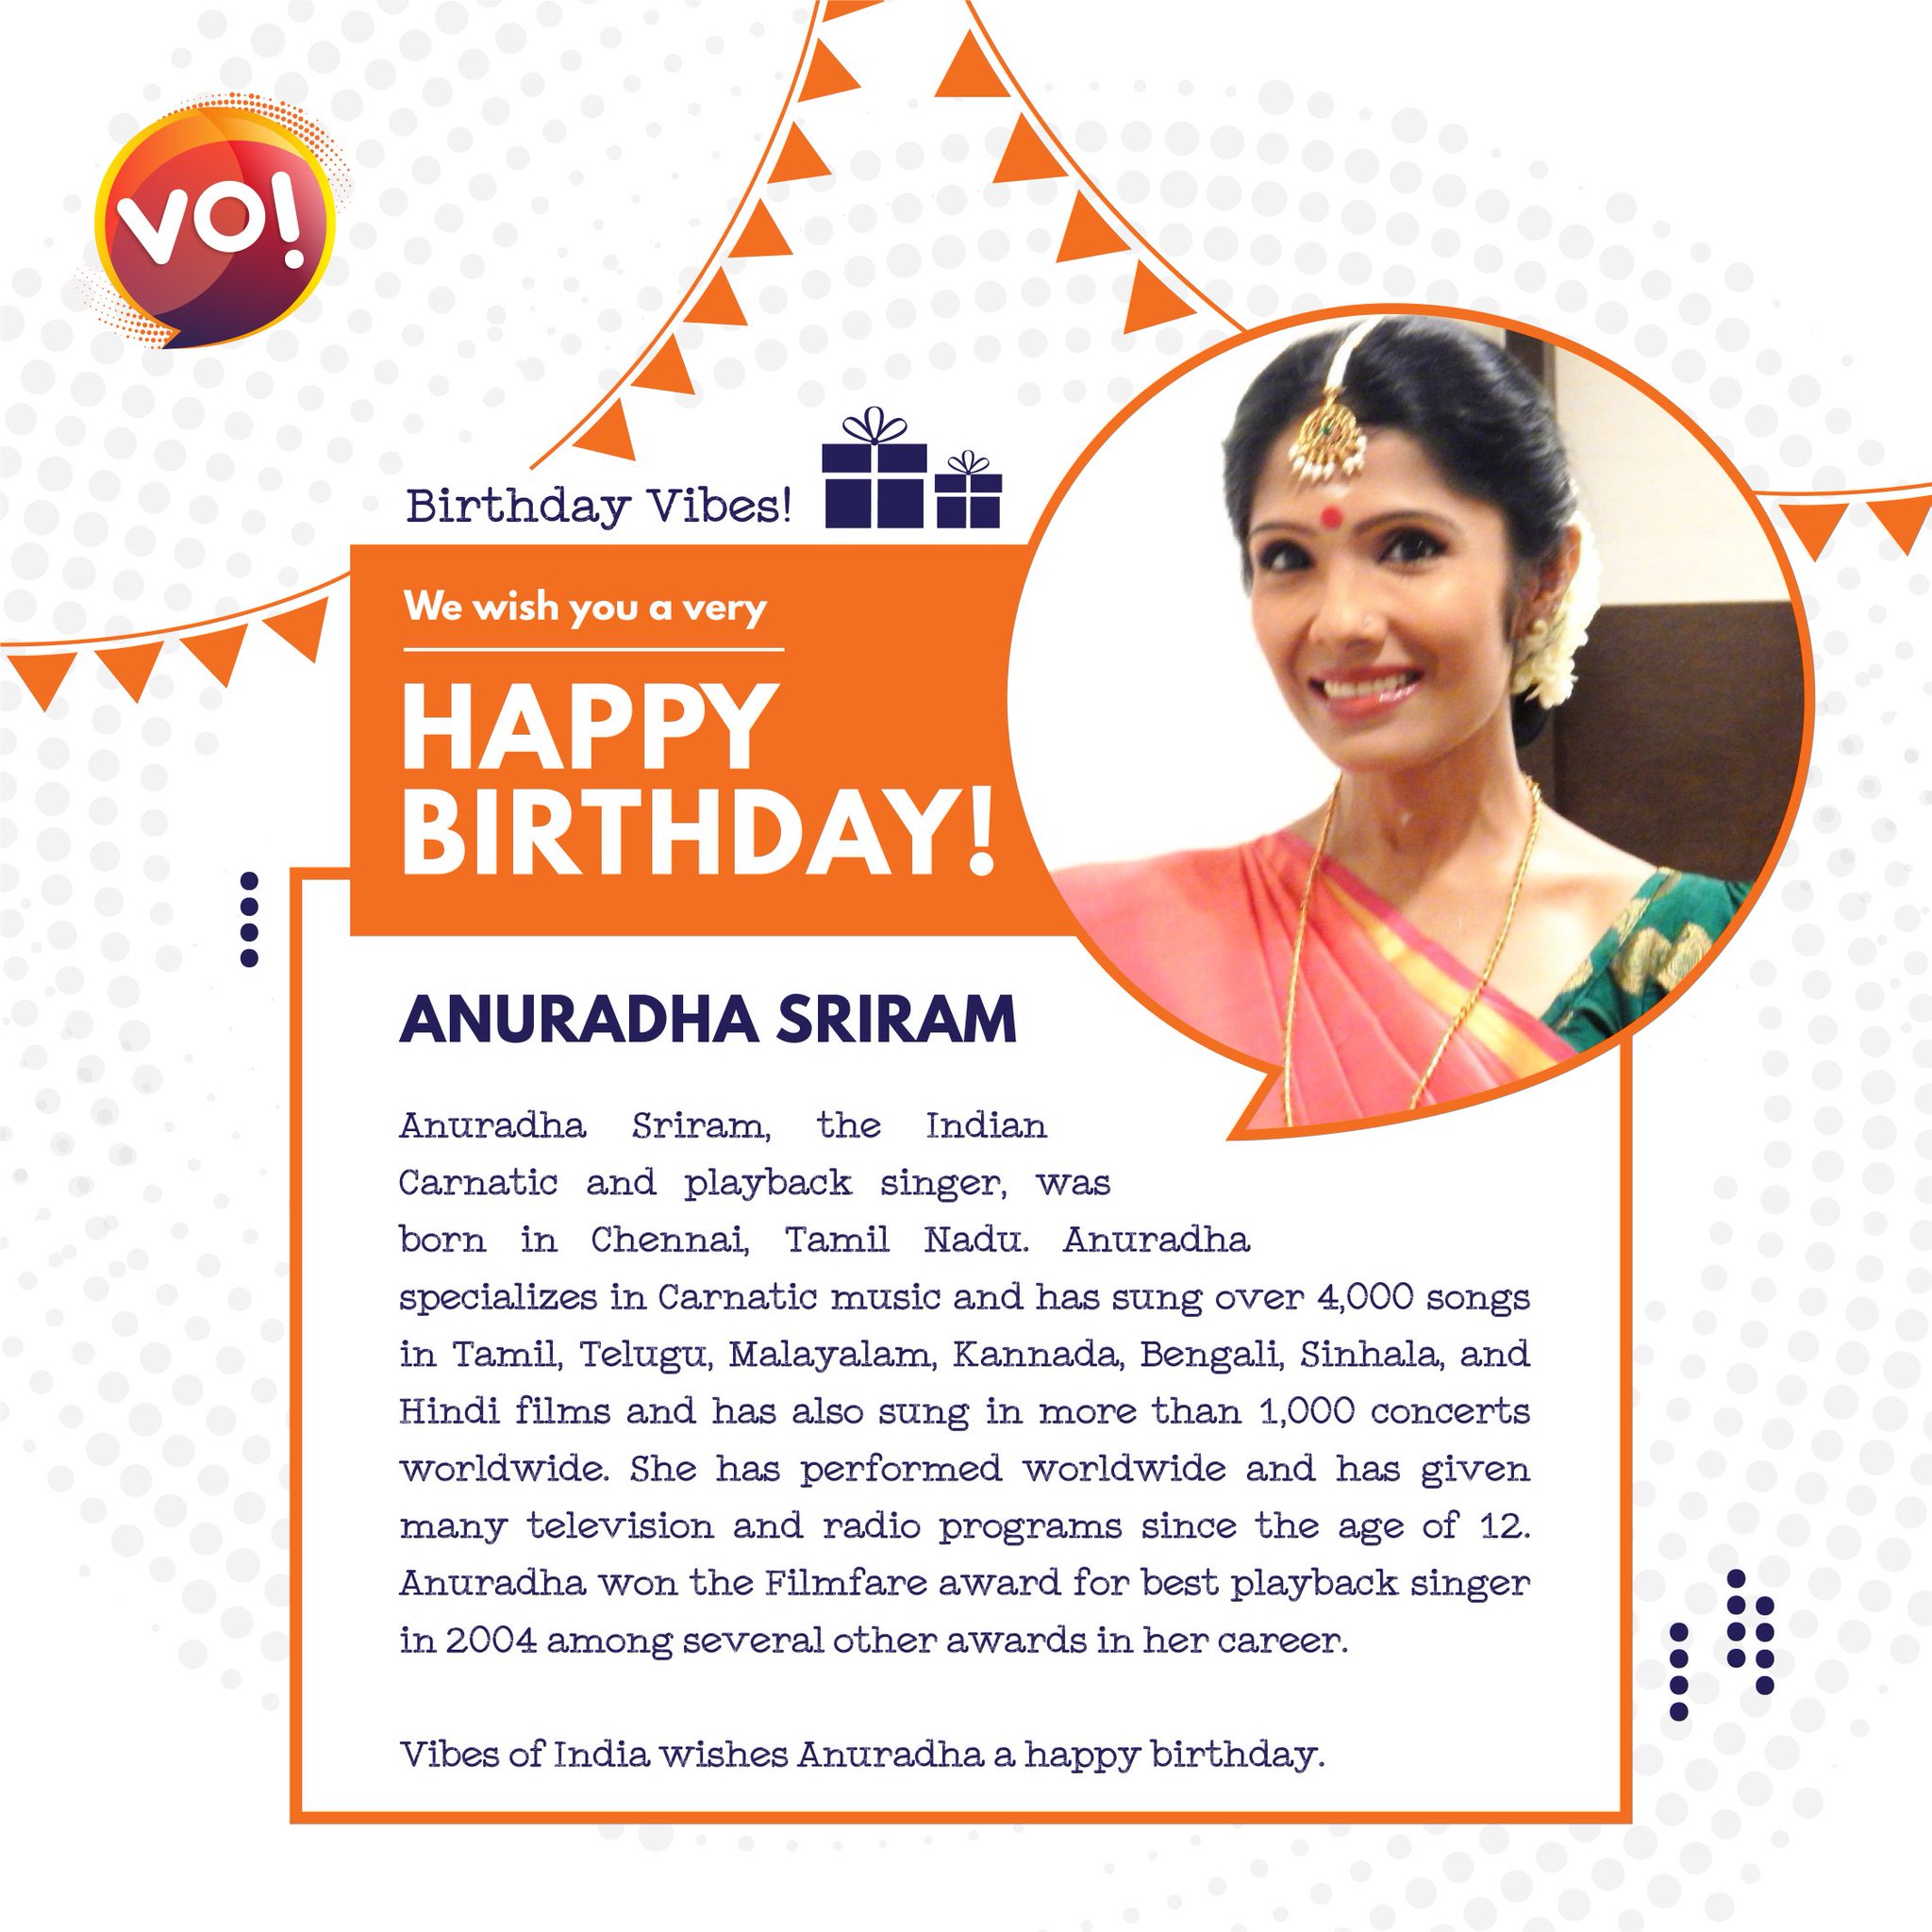 Happy Birthday, Anuradha Sriram 